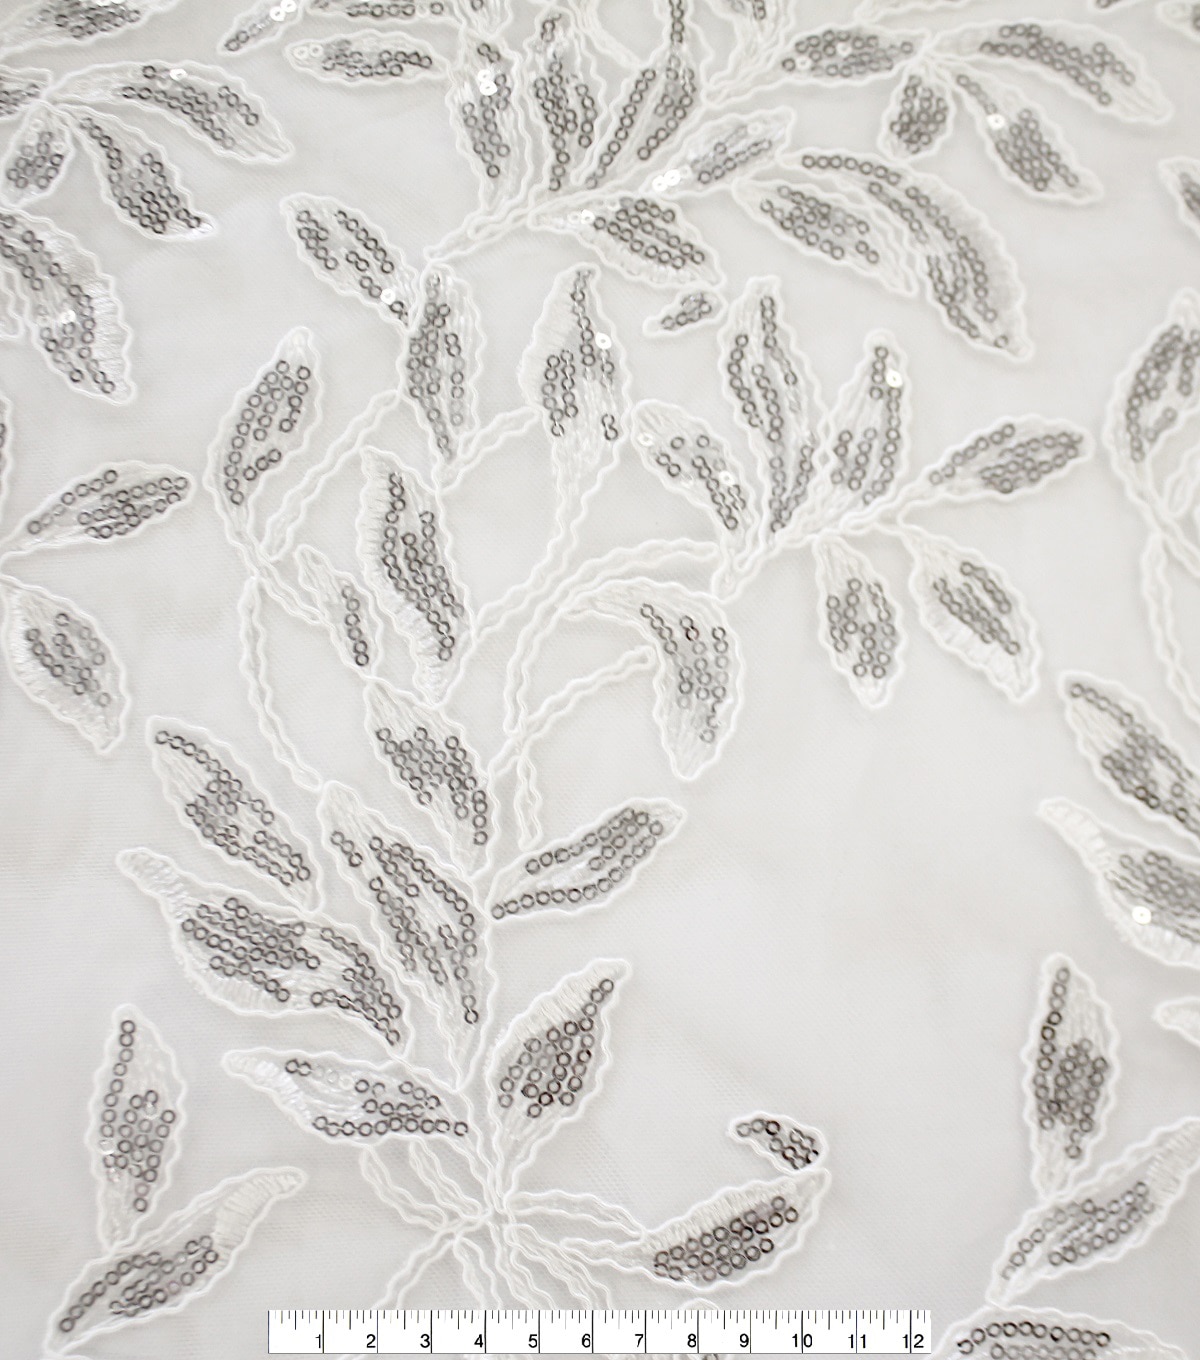 Embellished Mesh Fabric Sequin Vines & Leaves | JOANN